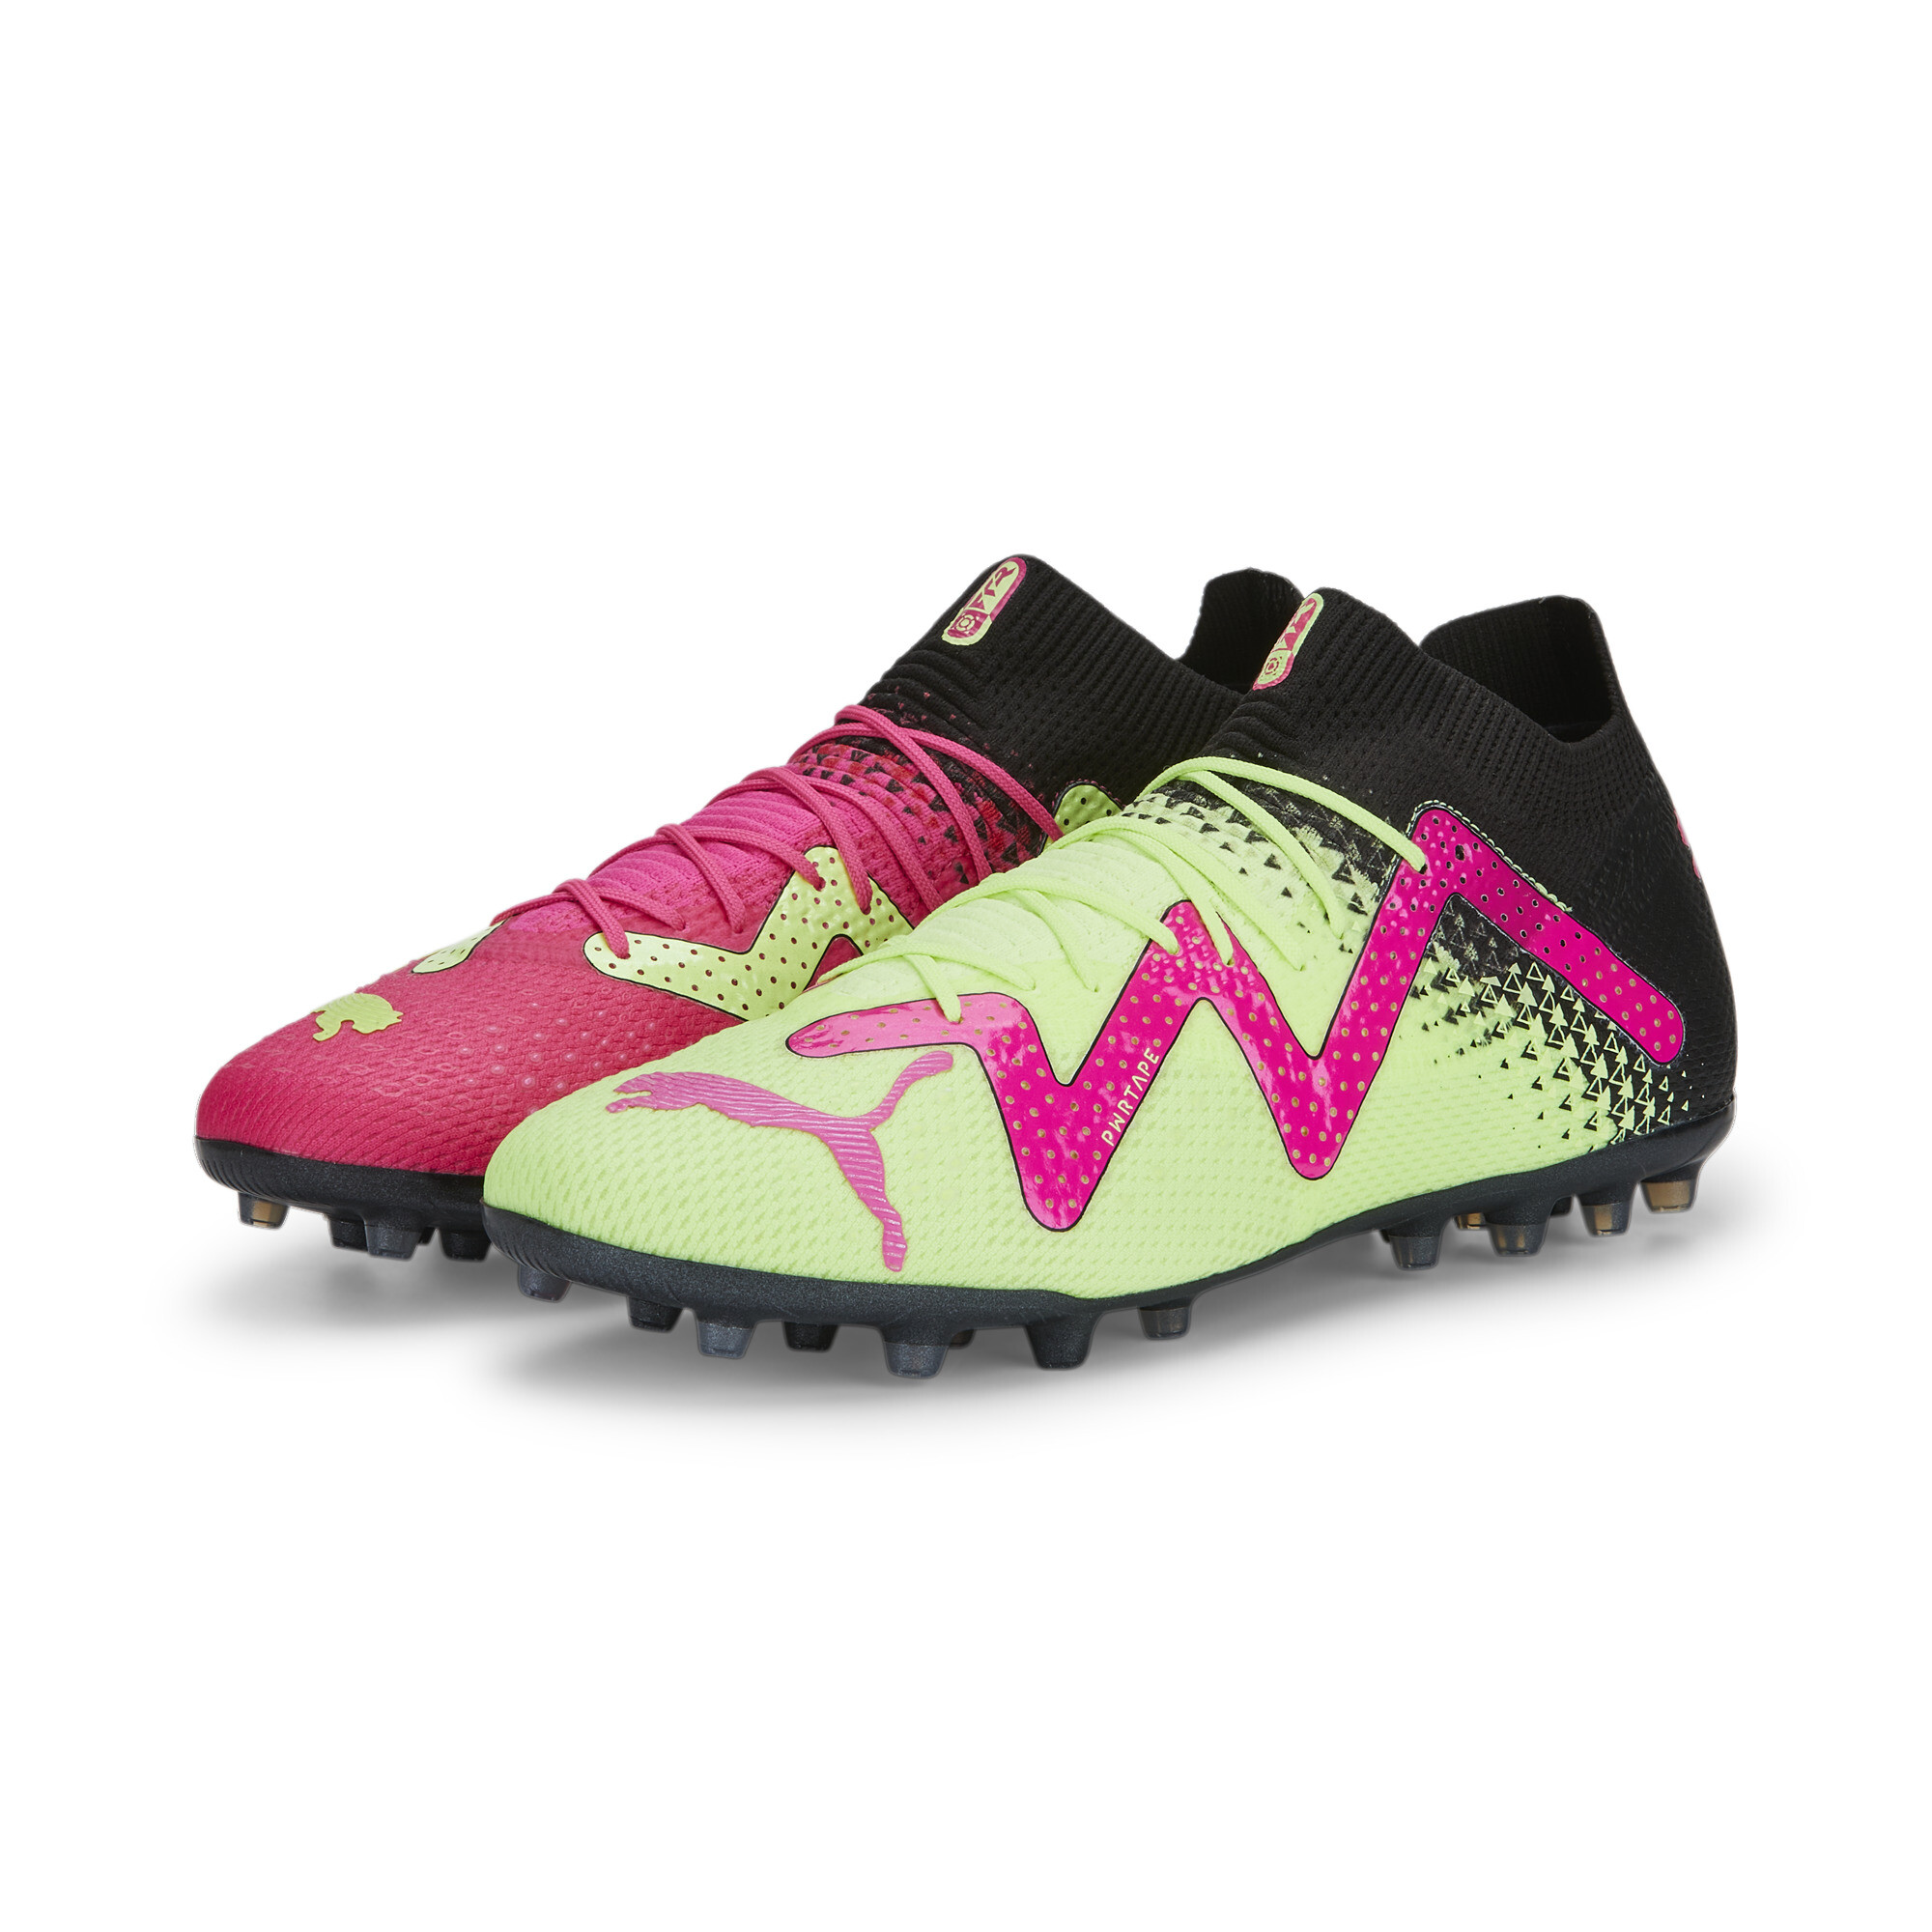 Men's Puma FUTURE ULTIMATE TRICKS MG Football Boots, Black, Size 38.5, Shoes